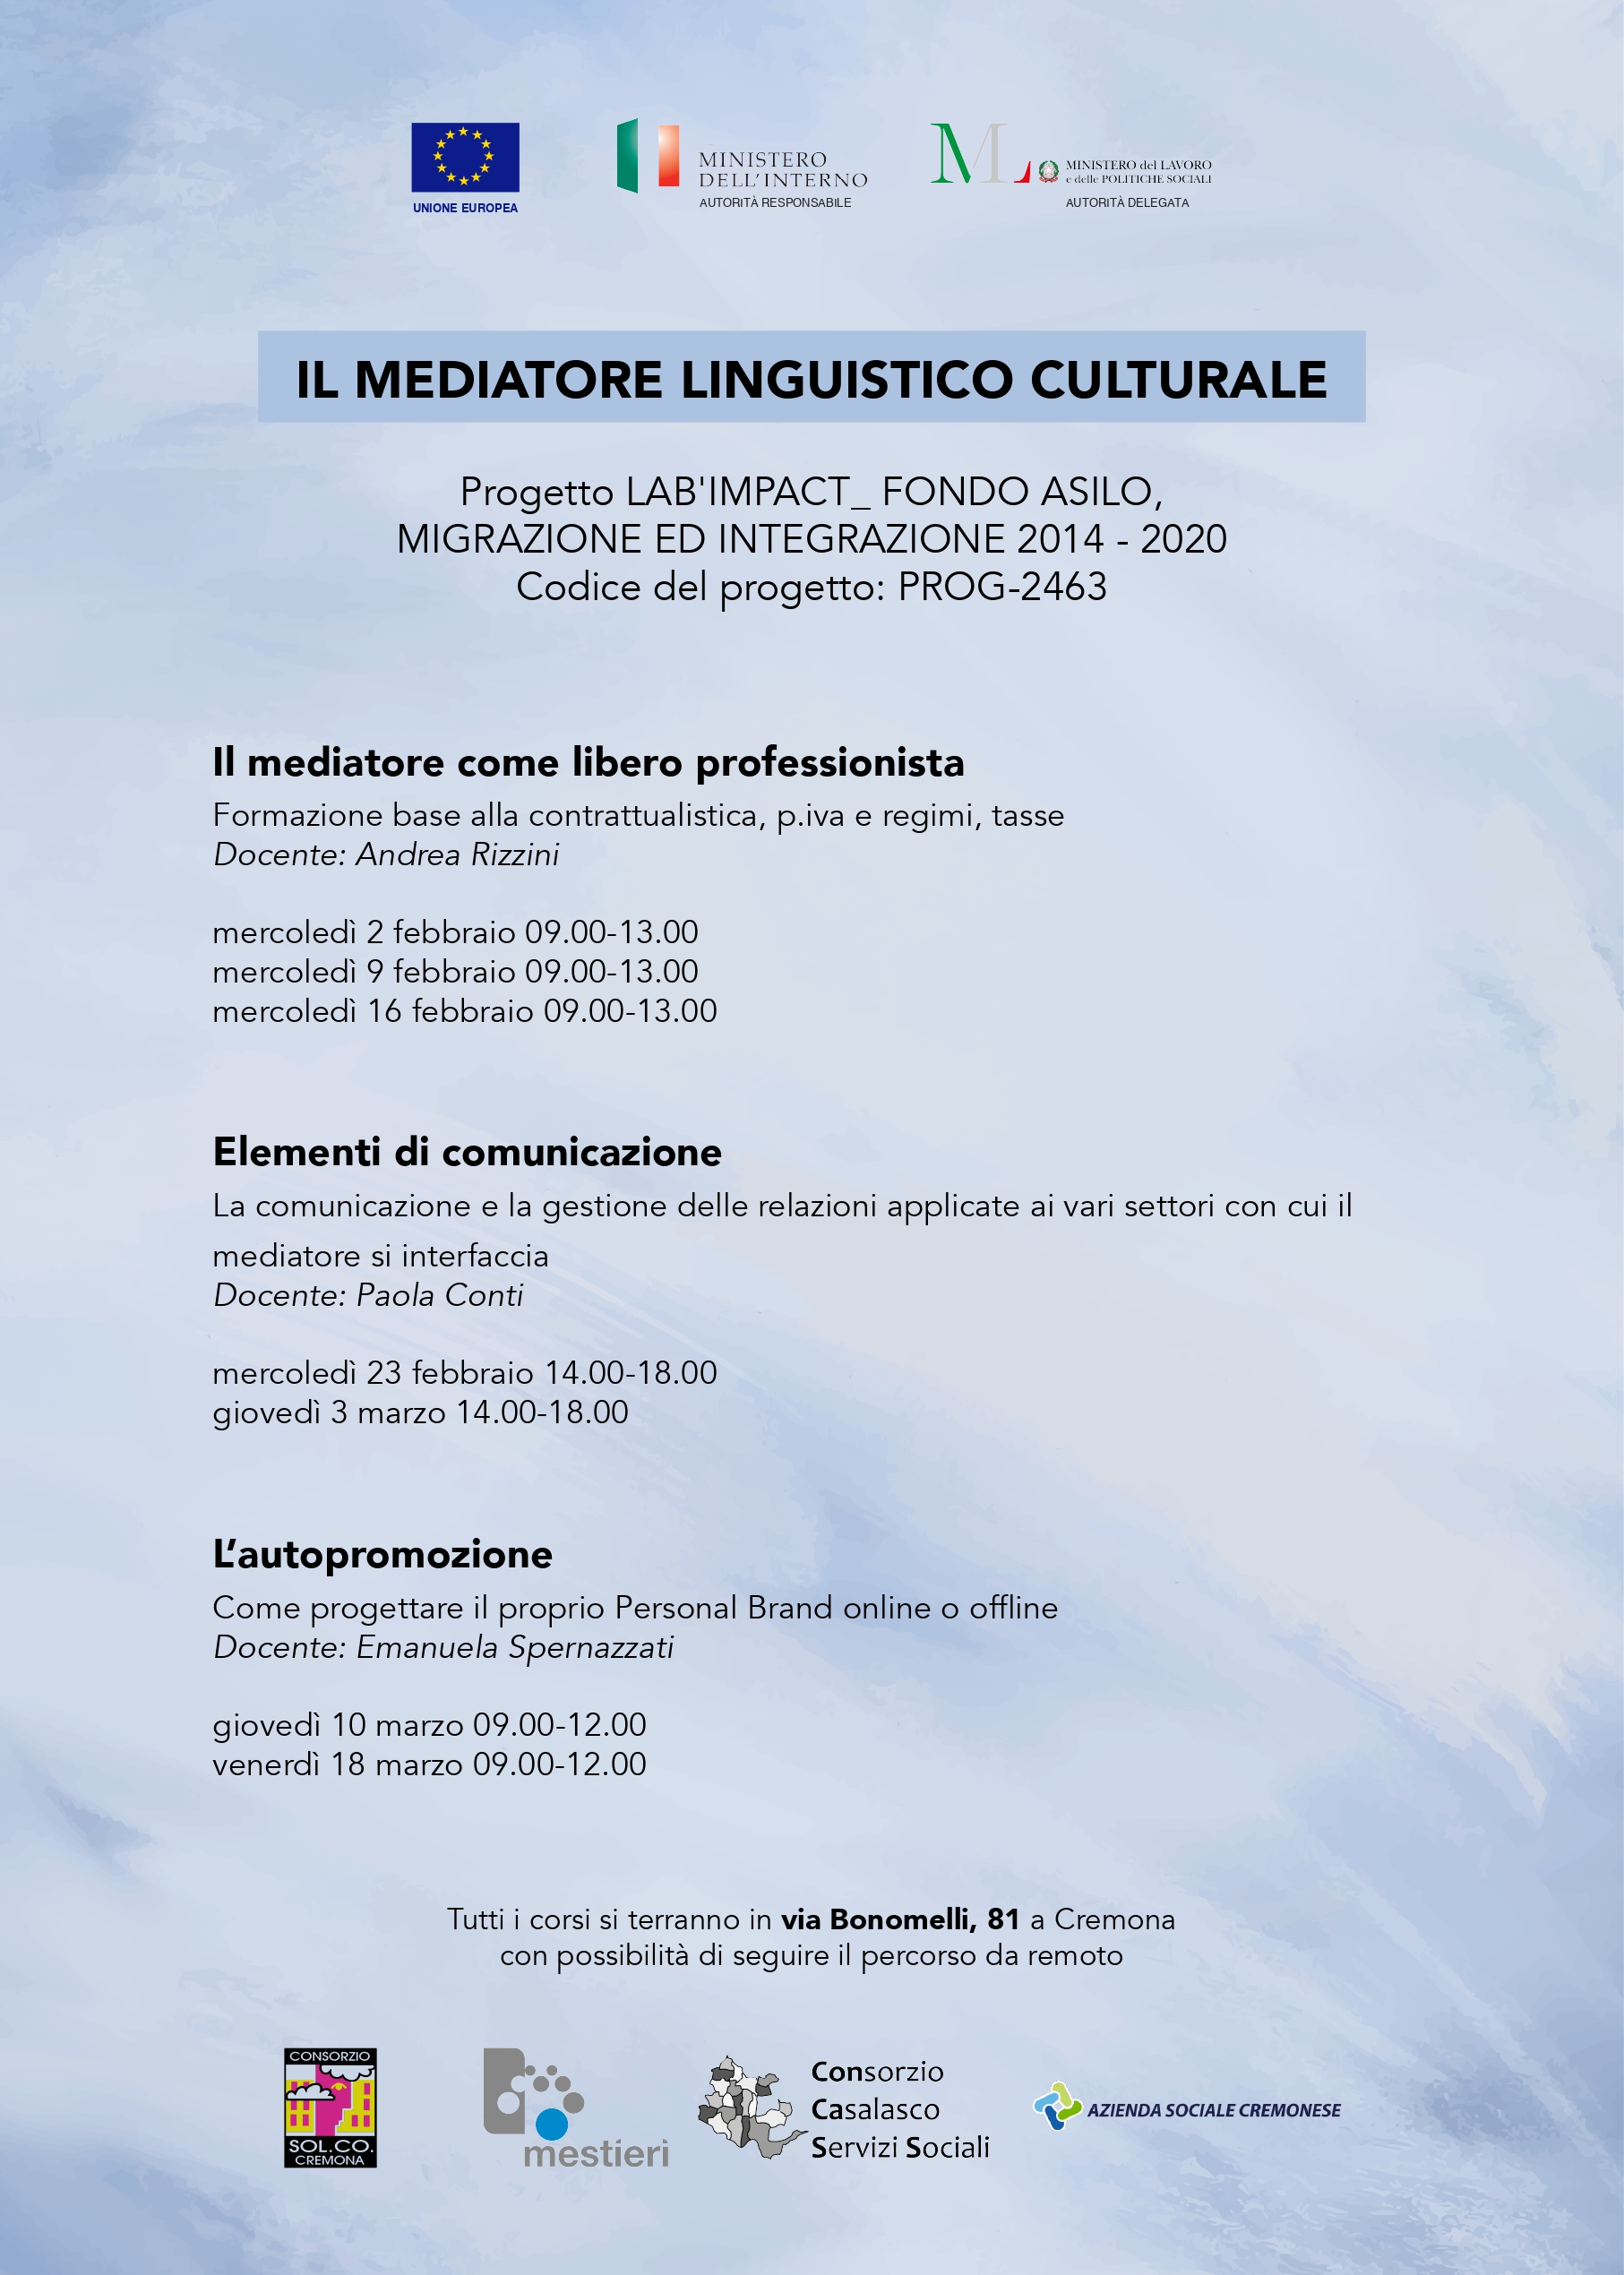 LOCANDINA_mediatorelinguisticoculturale_def_page-0001